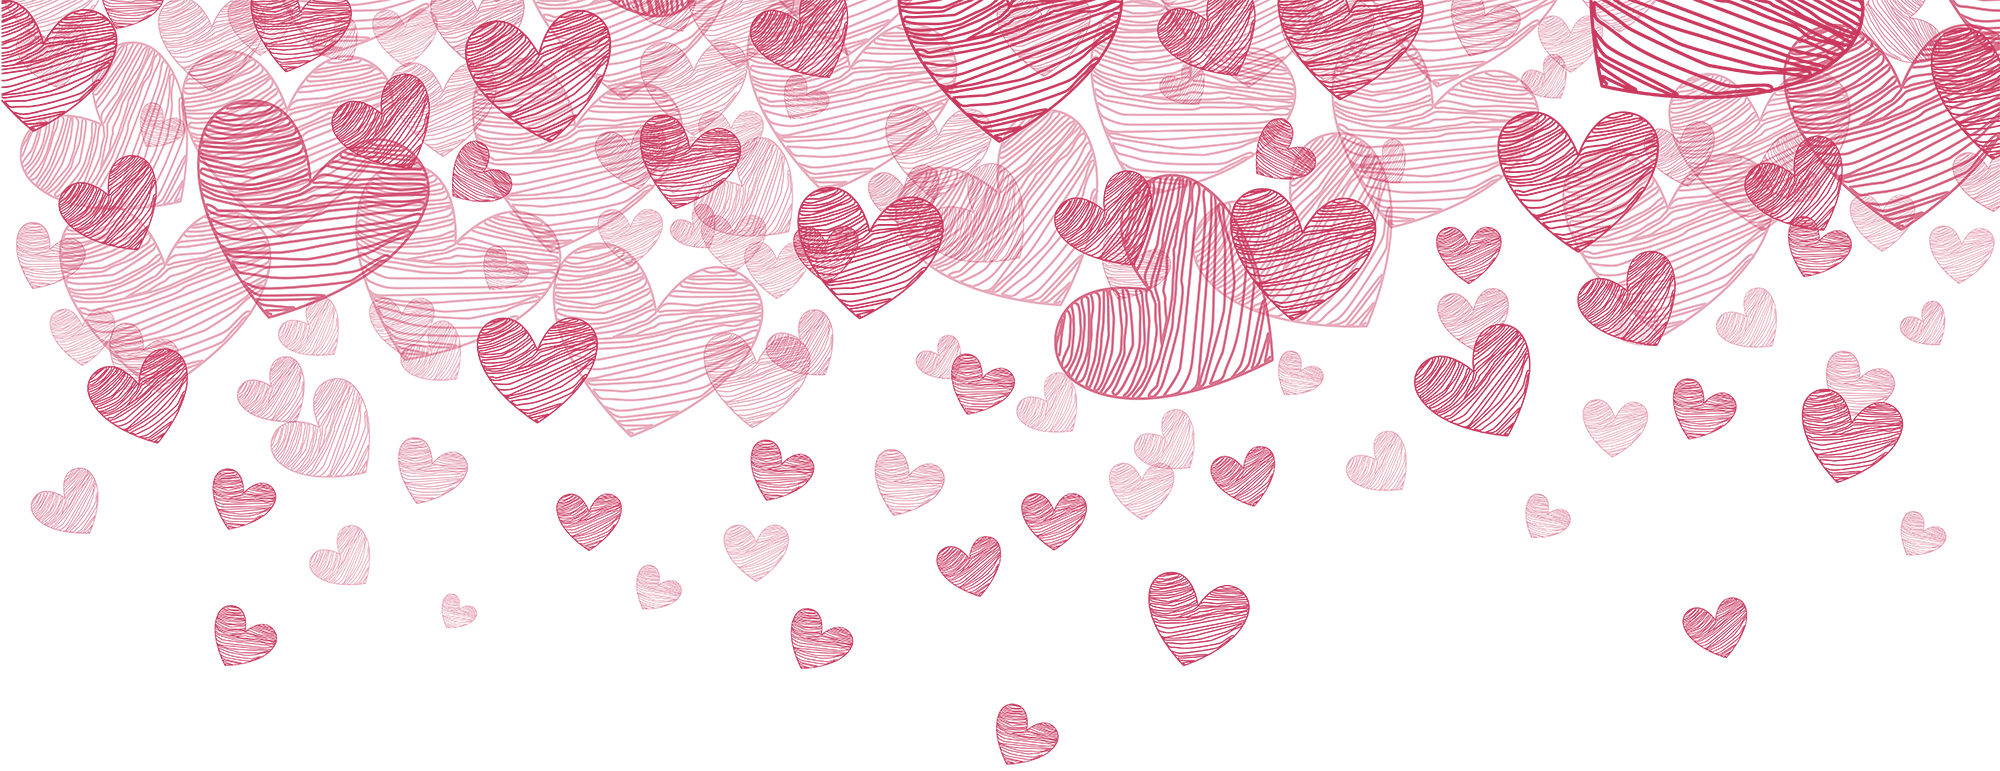 Free download Talking about heart health Gazelle Girl Half Marathon  [2000x771] for your Desktop, Mobile & Tablet | Explore 74+ Hearts Background  | Broken Hearts Wallpapers, Hearts Background Wallpaper, Pink Hearts  Backgrounds